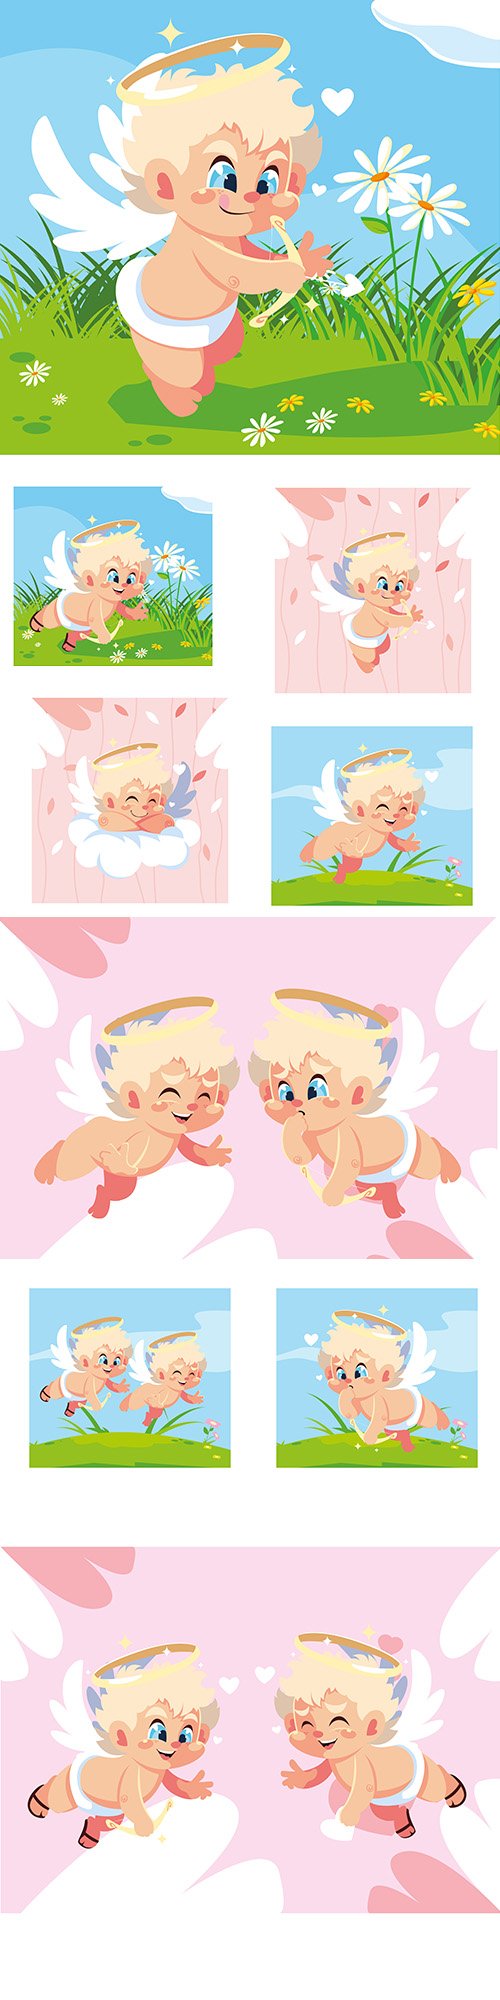 Cute angel cupid illustration Valentine 's Day